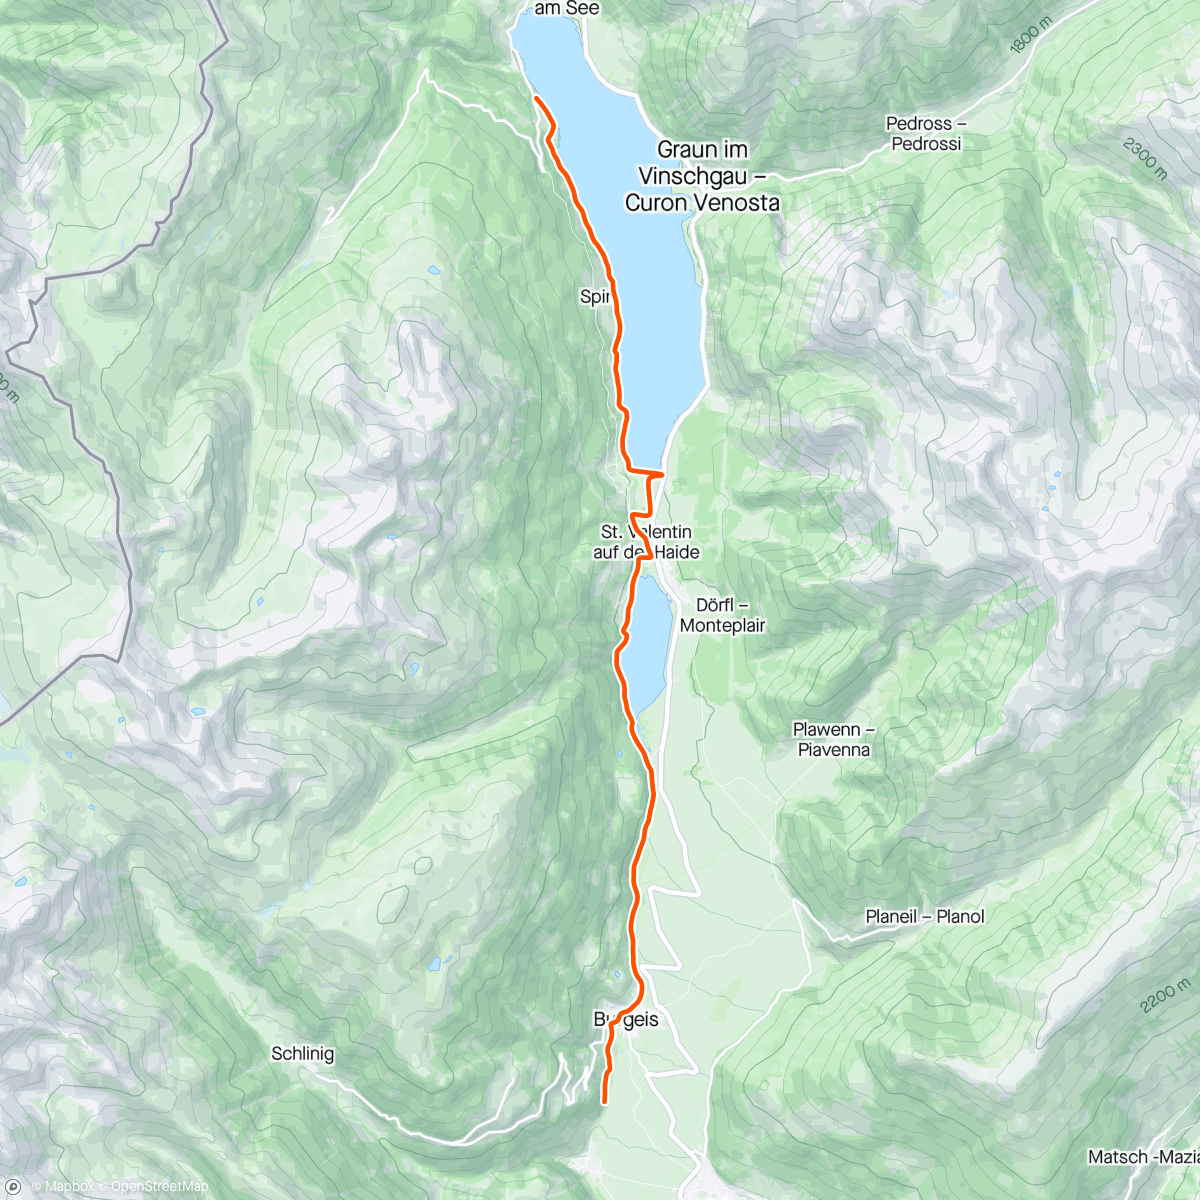 Mappa dell'attività Kinomap - 30 minute Ultimate Indoor Cycling Workout Alps South Tyrol Lake Tour 2020 Garmin Ultra HD Video